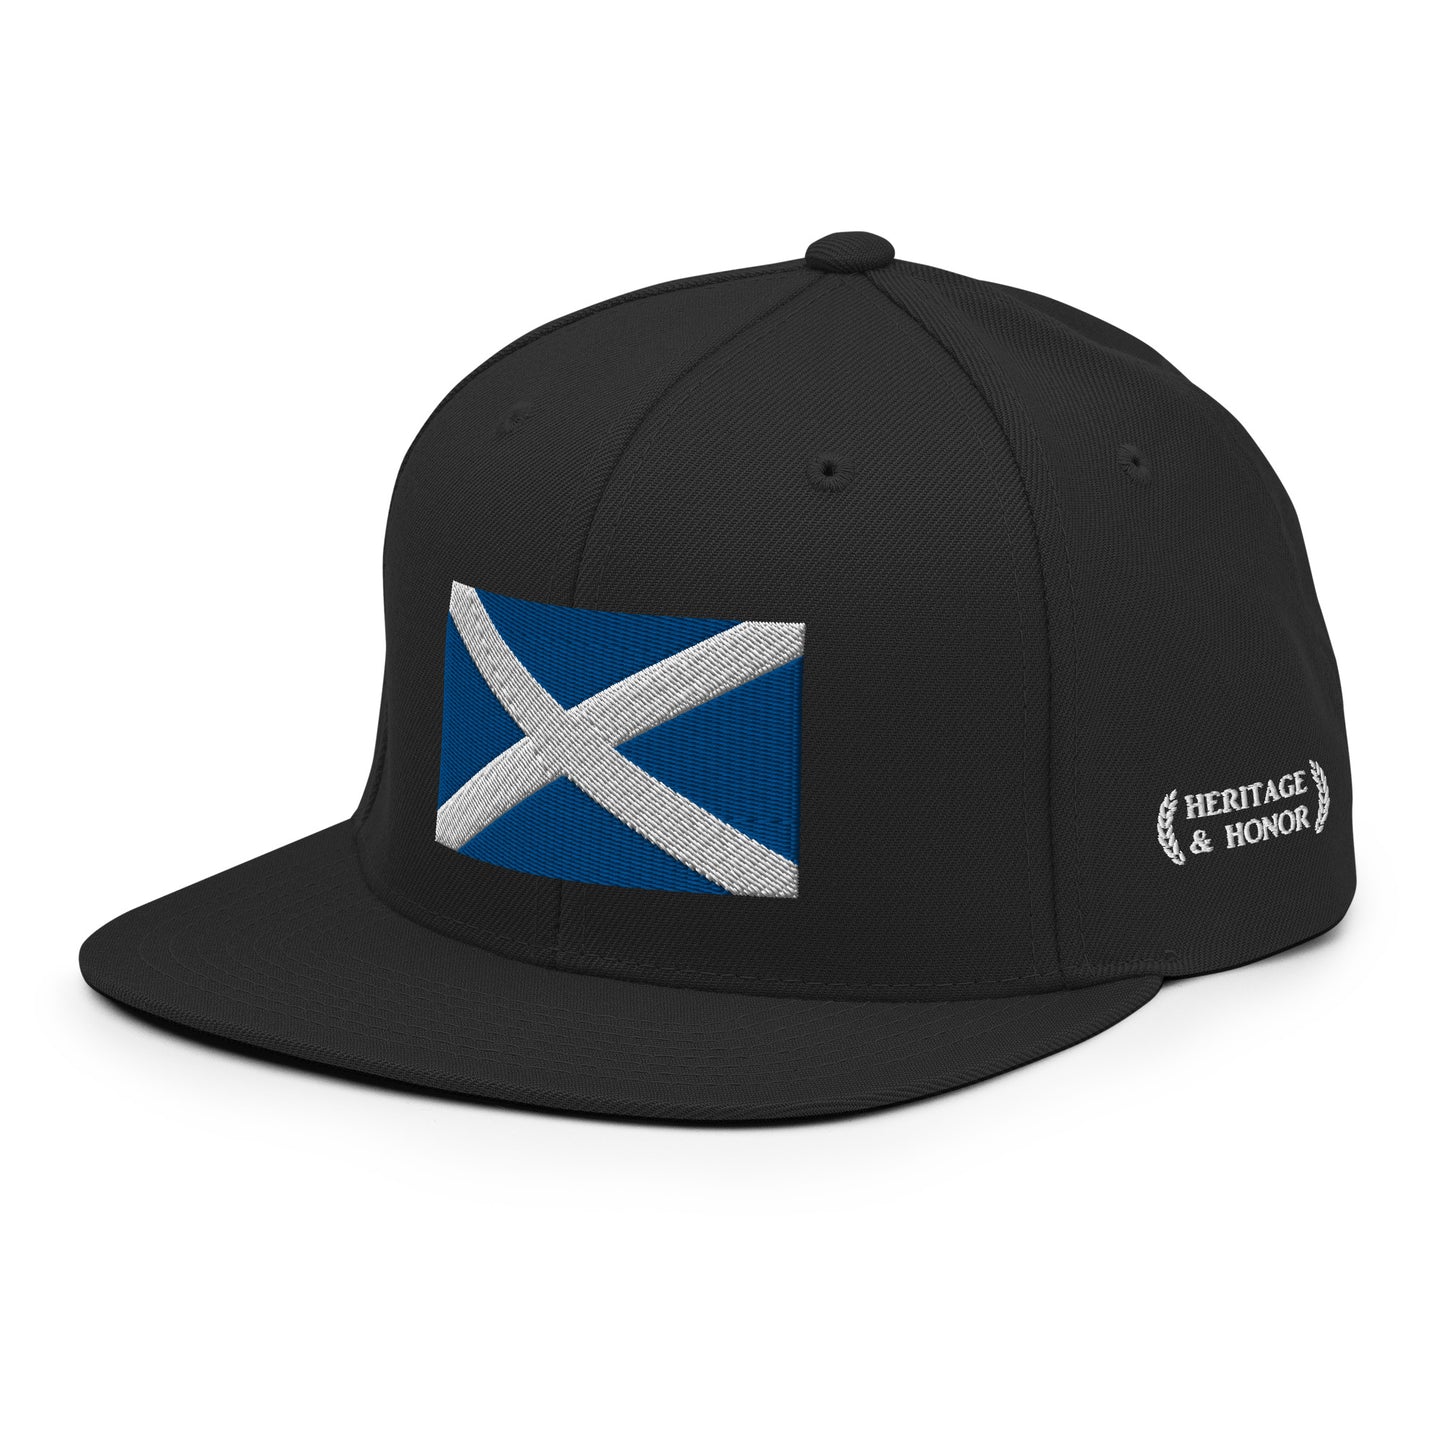 Heritage & Honor Snapback Cap 'Scotland' 2